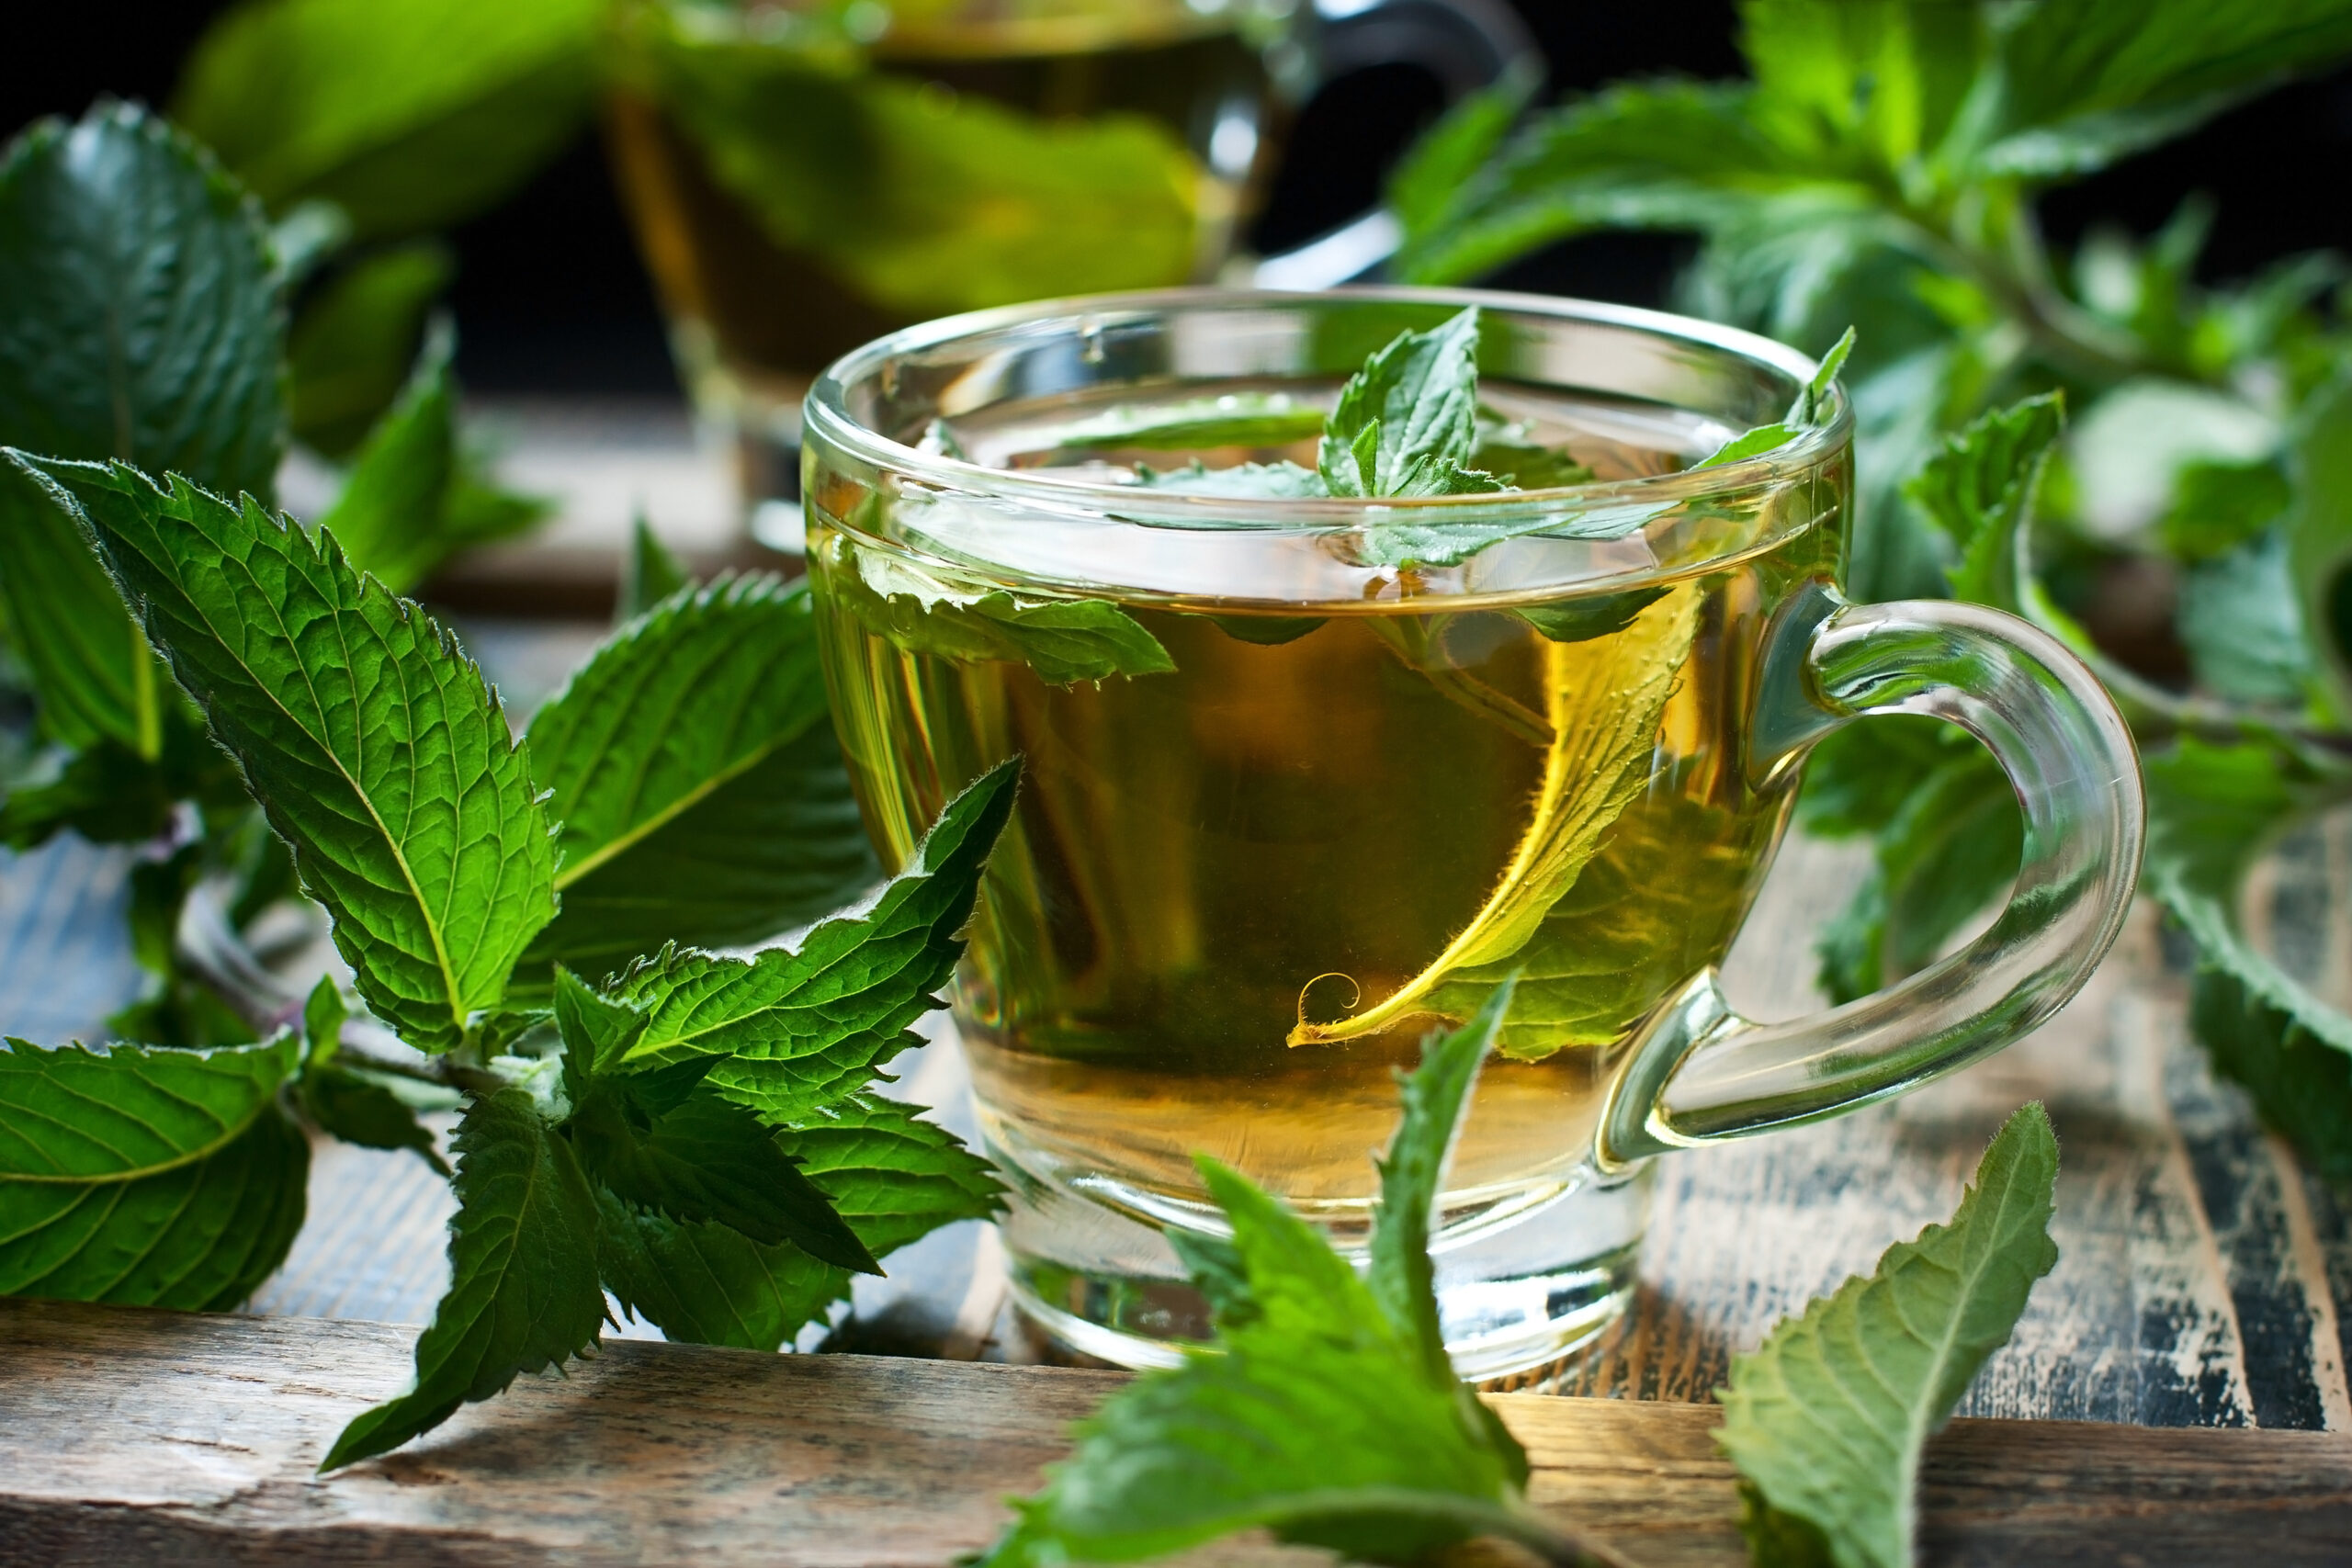 Mint Tea for Wellness & Flavor: Range of Styles Offer Diversity